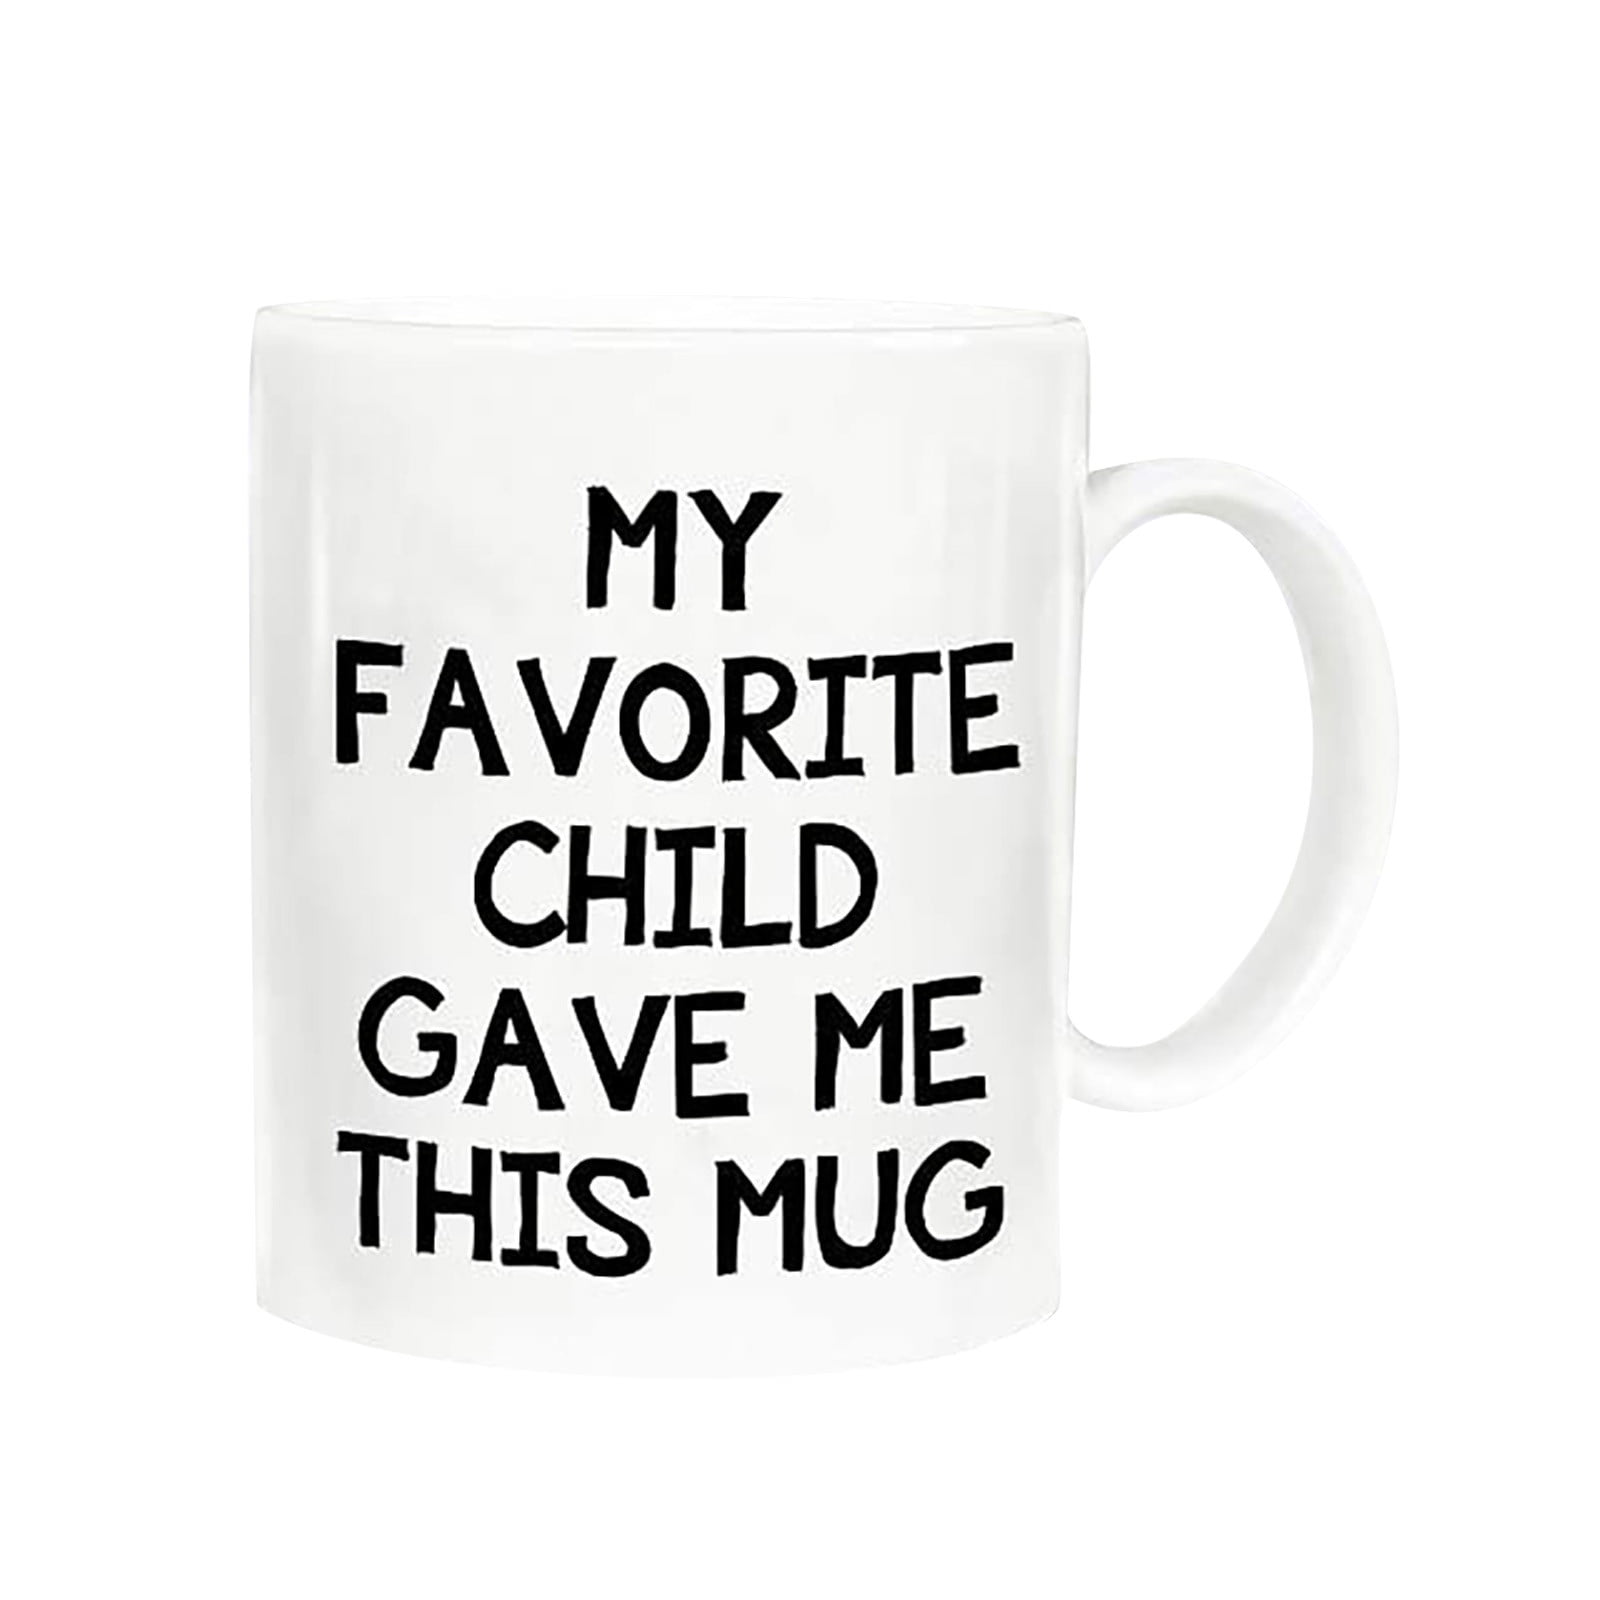 Grumpy But Lovely Funny Mug Novelty Gift Idea Coffee Tea Secret Santa. 